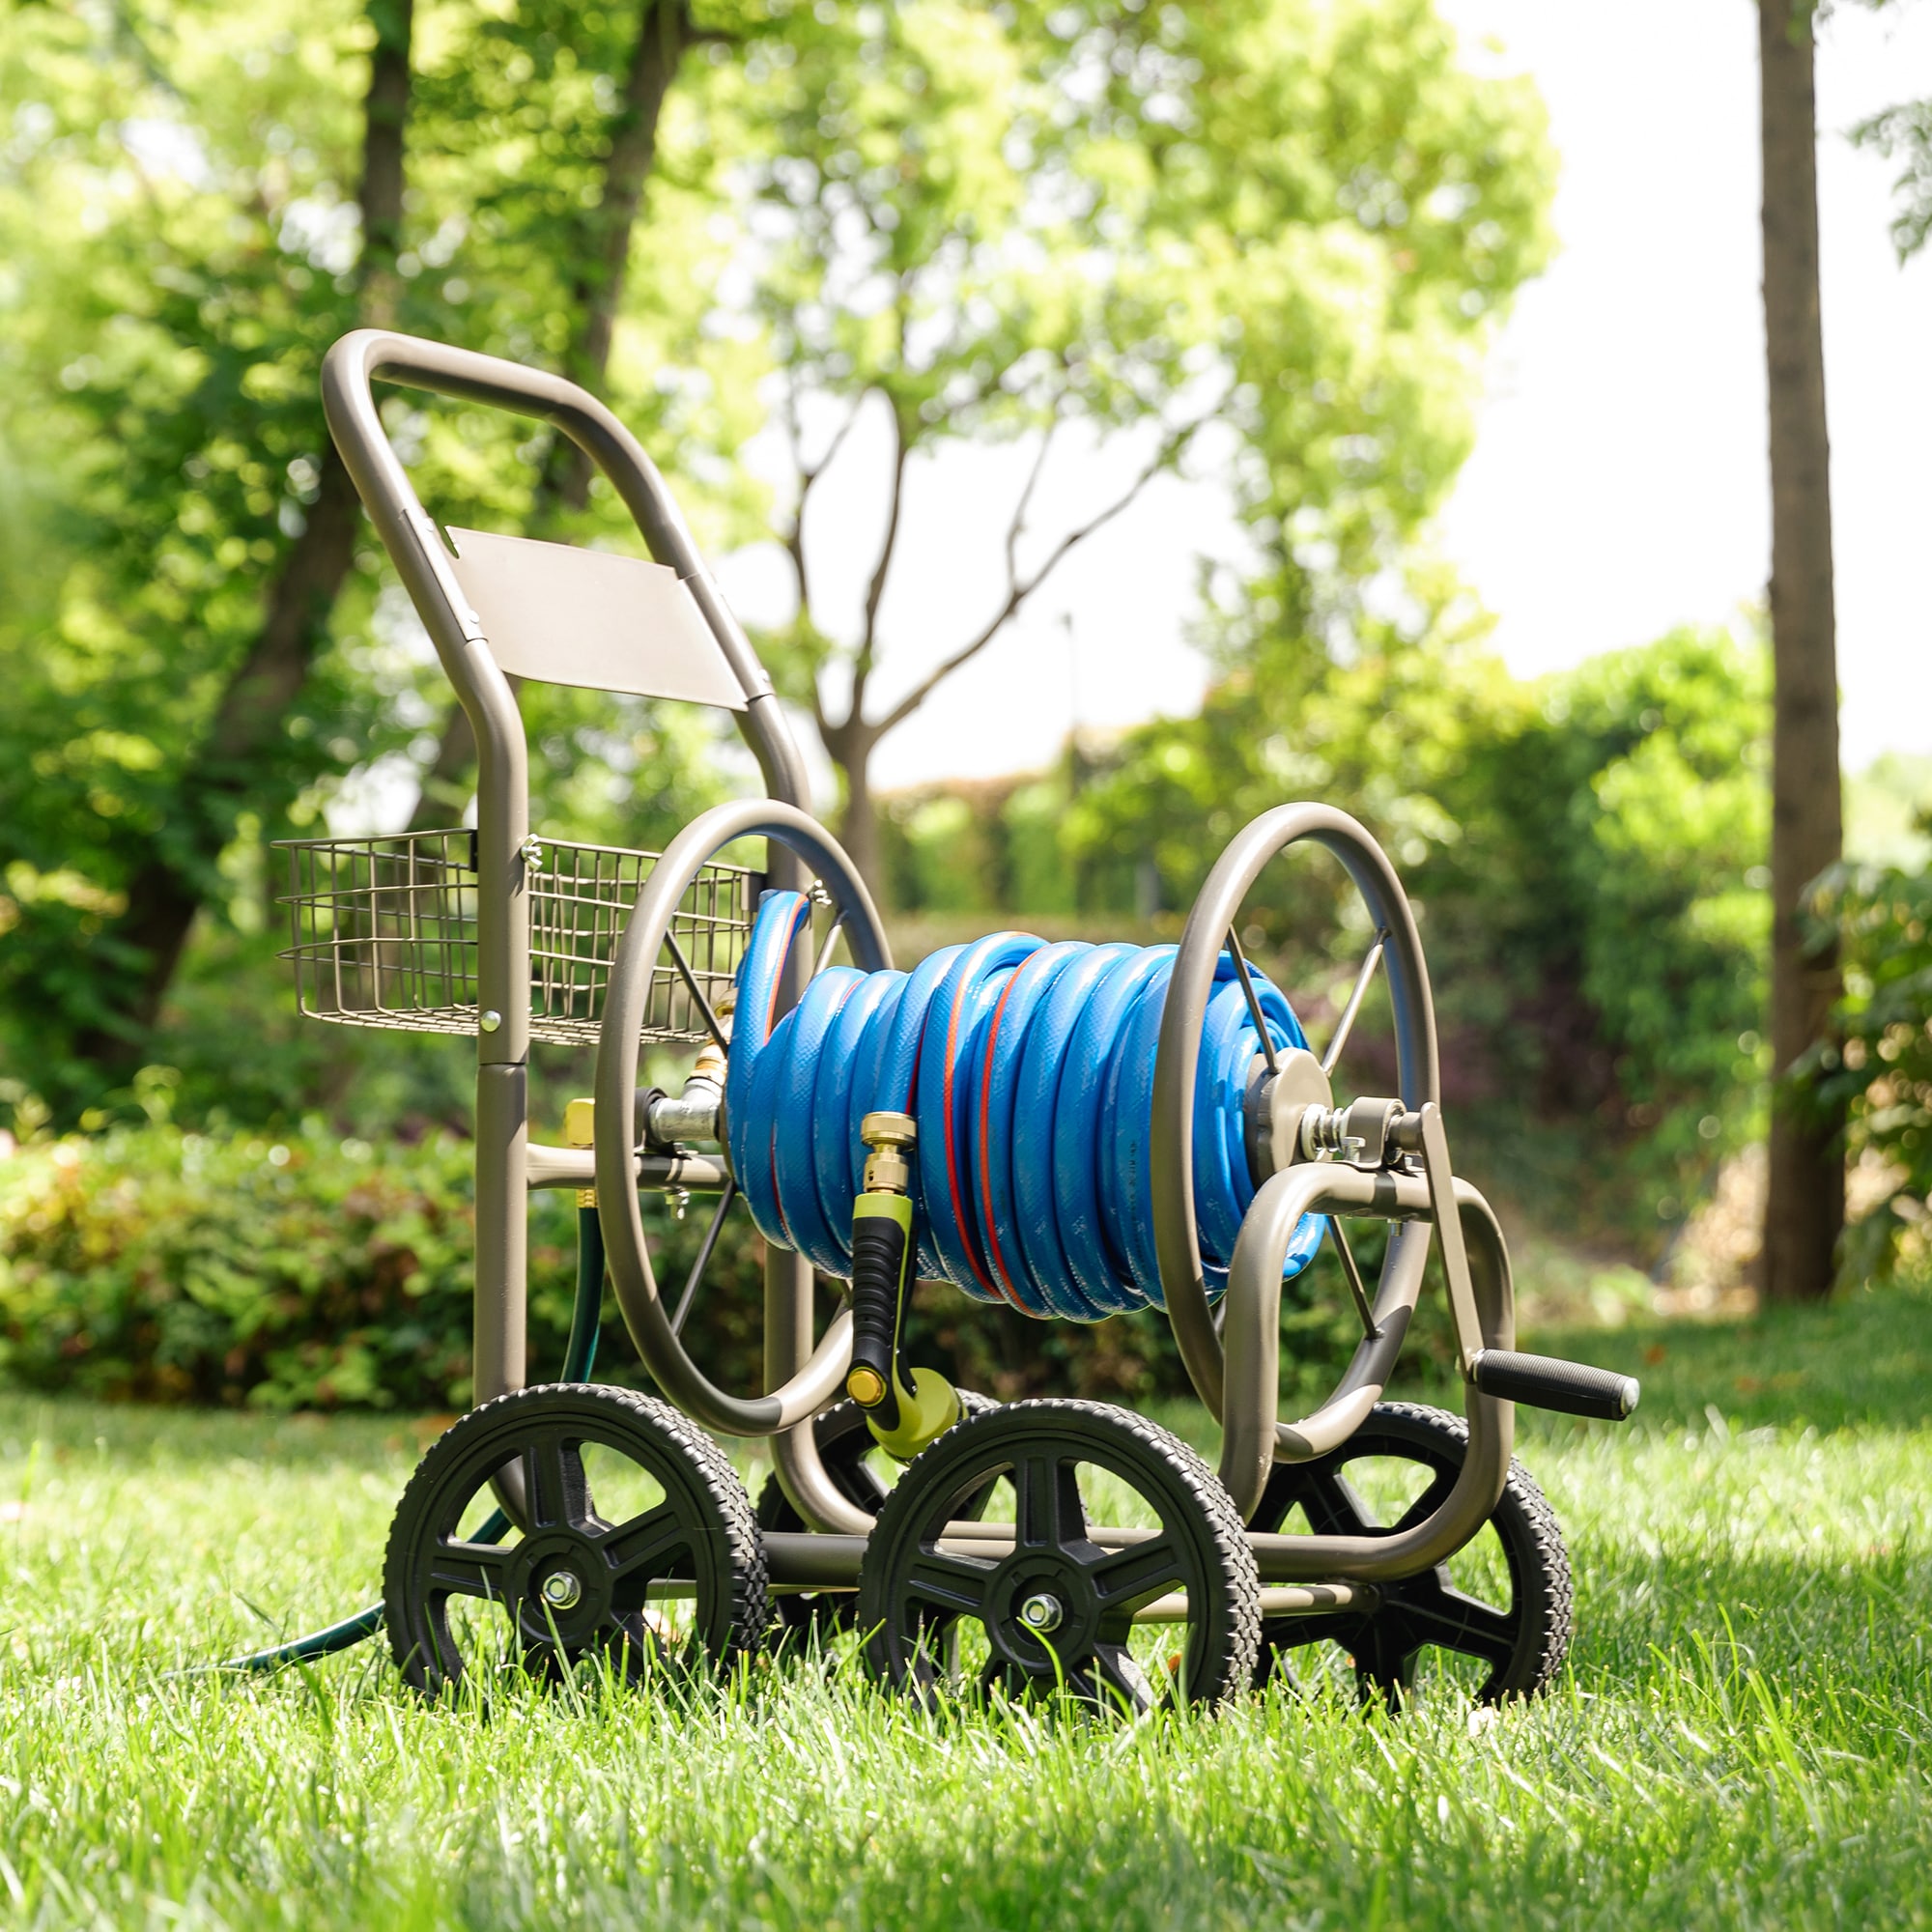 Waterette Garden Hose Cart is a Stylish Gardening Accessory